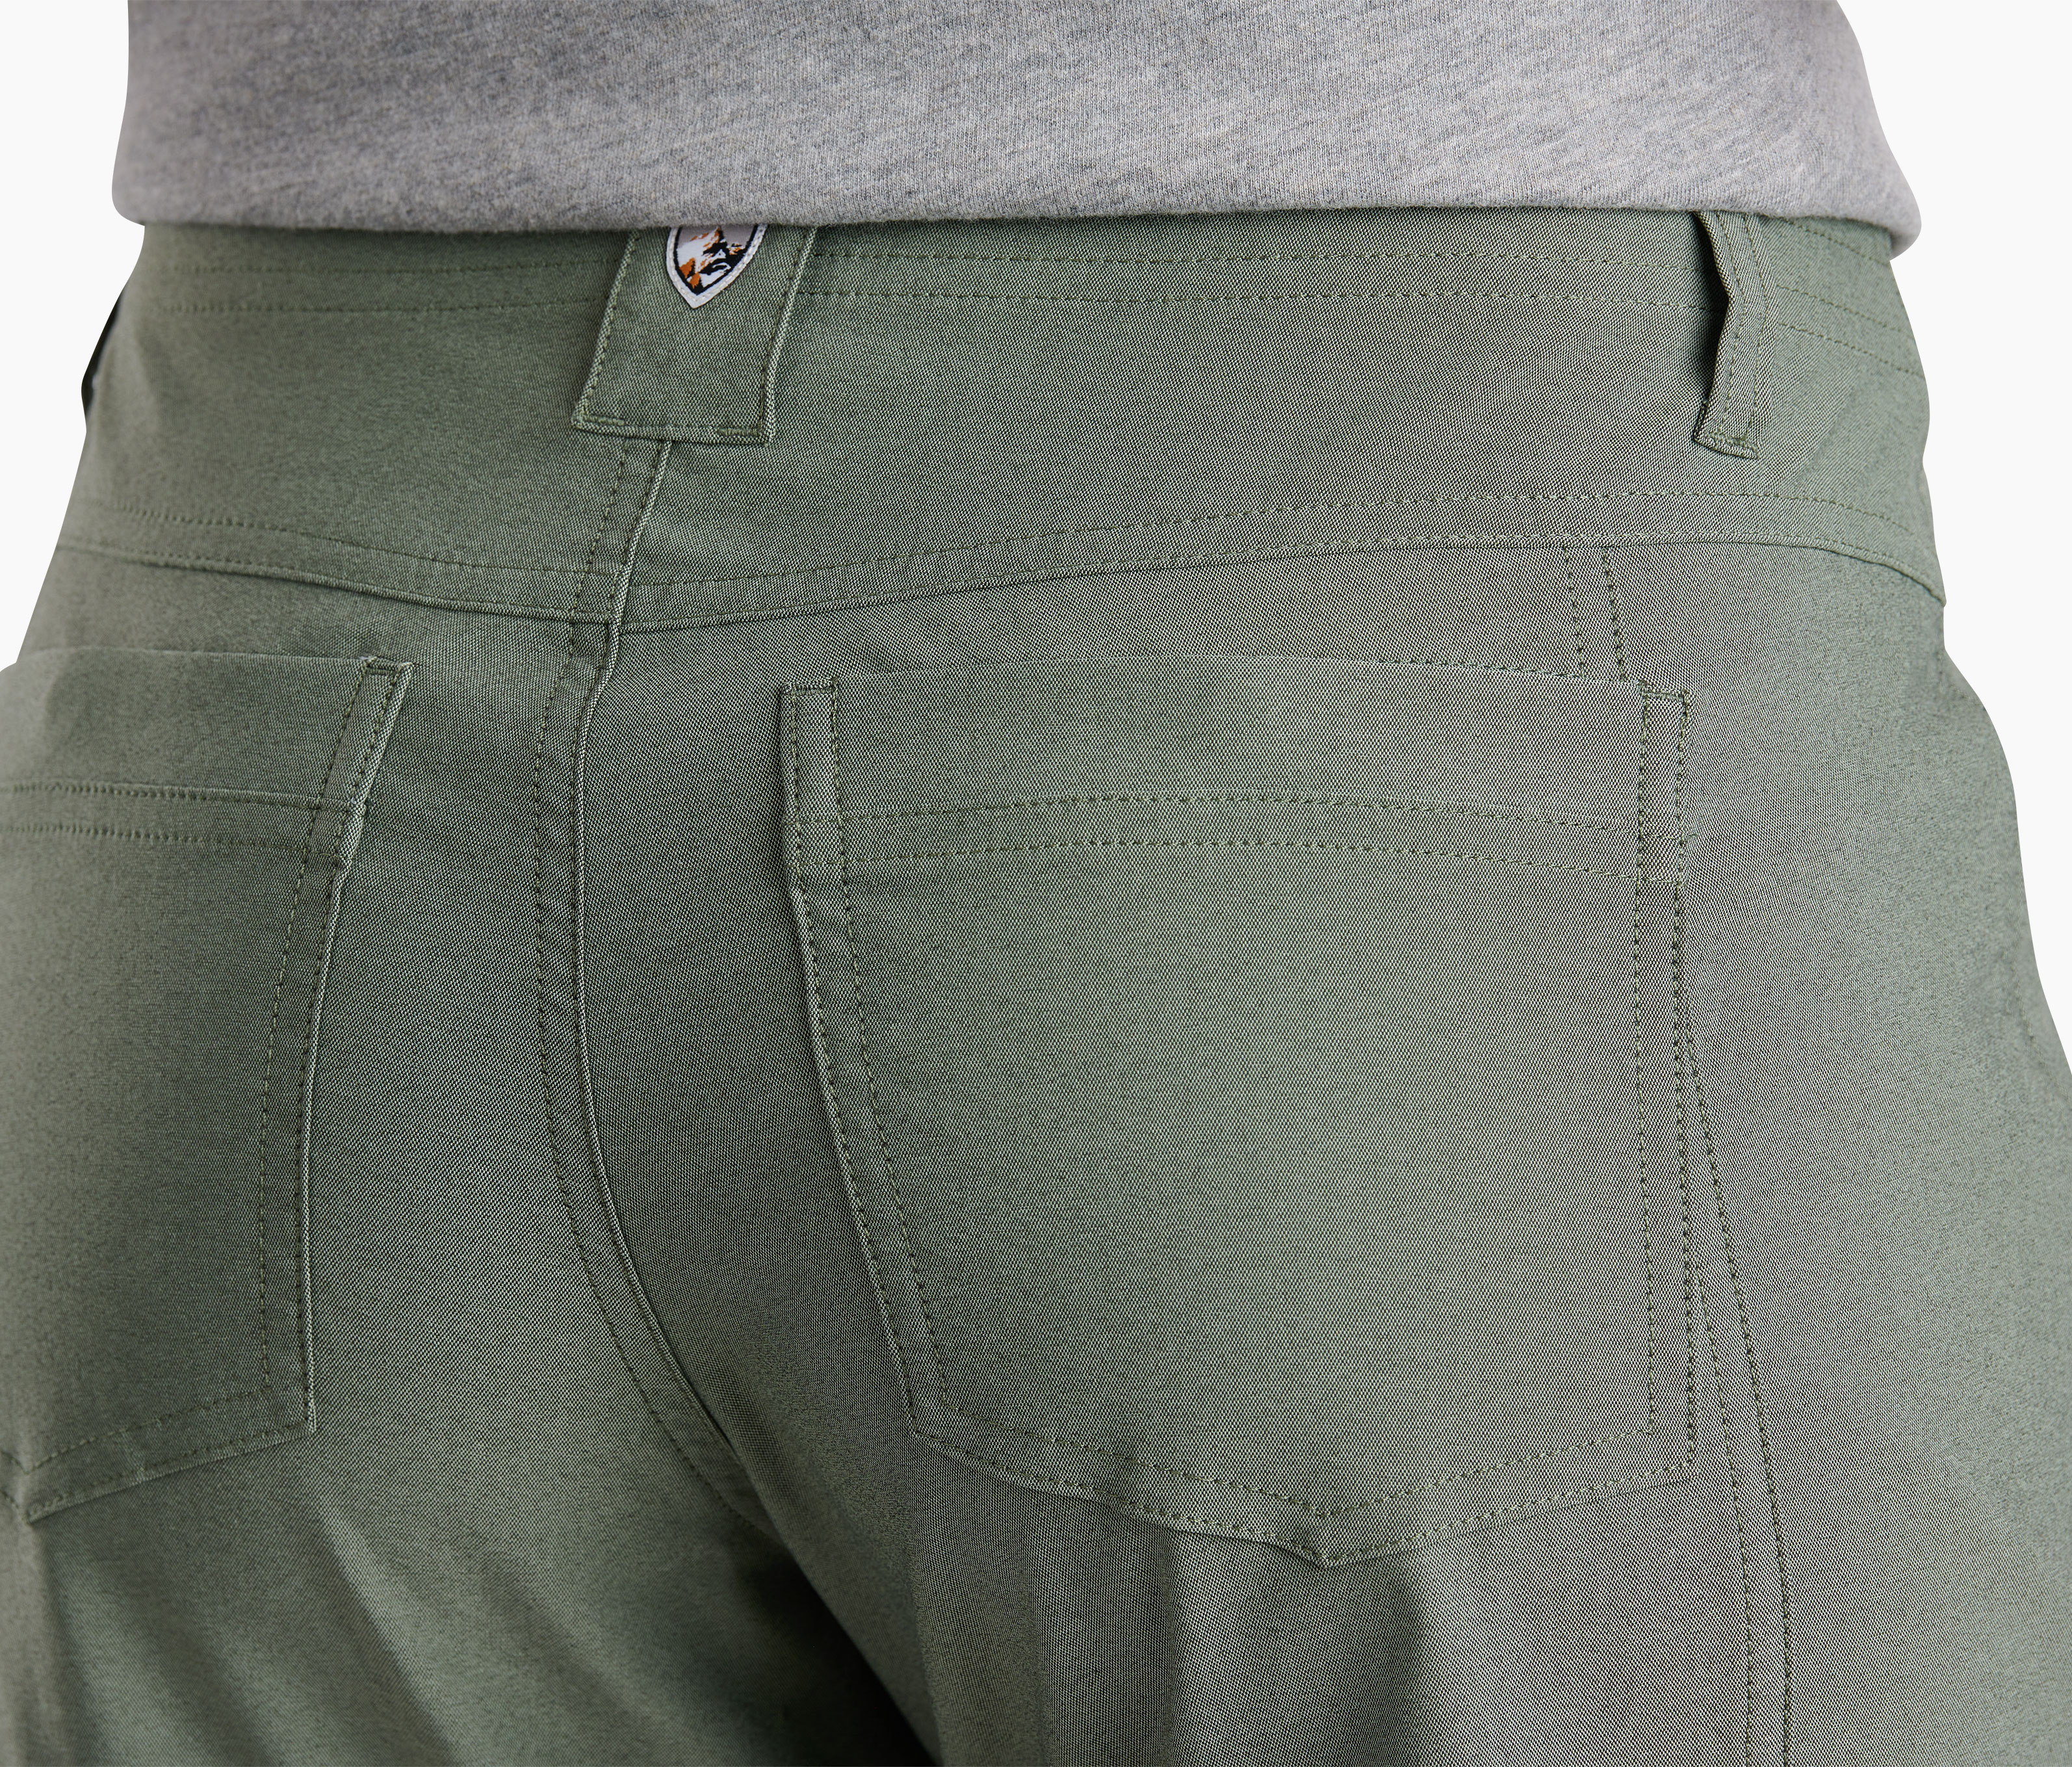 Kuhl womens Pants (short) Army Green small bleach spot size 6